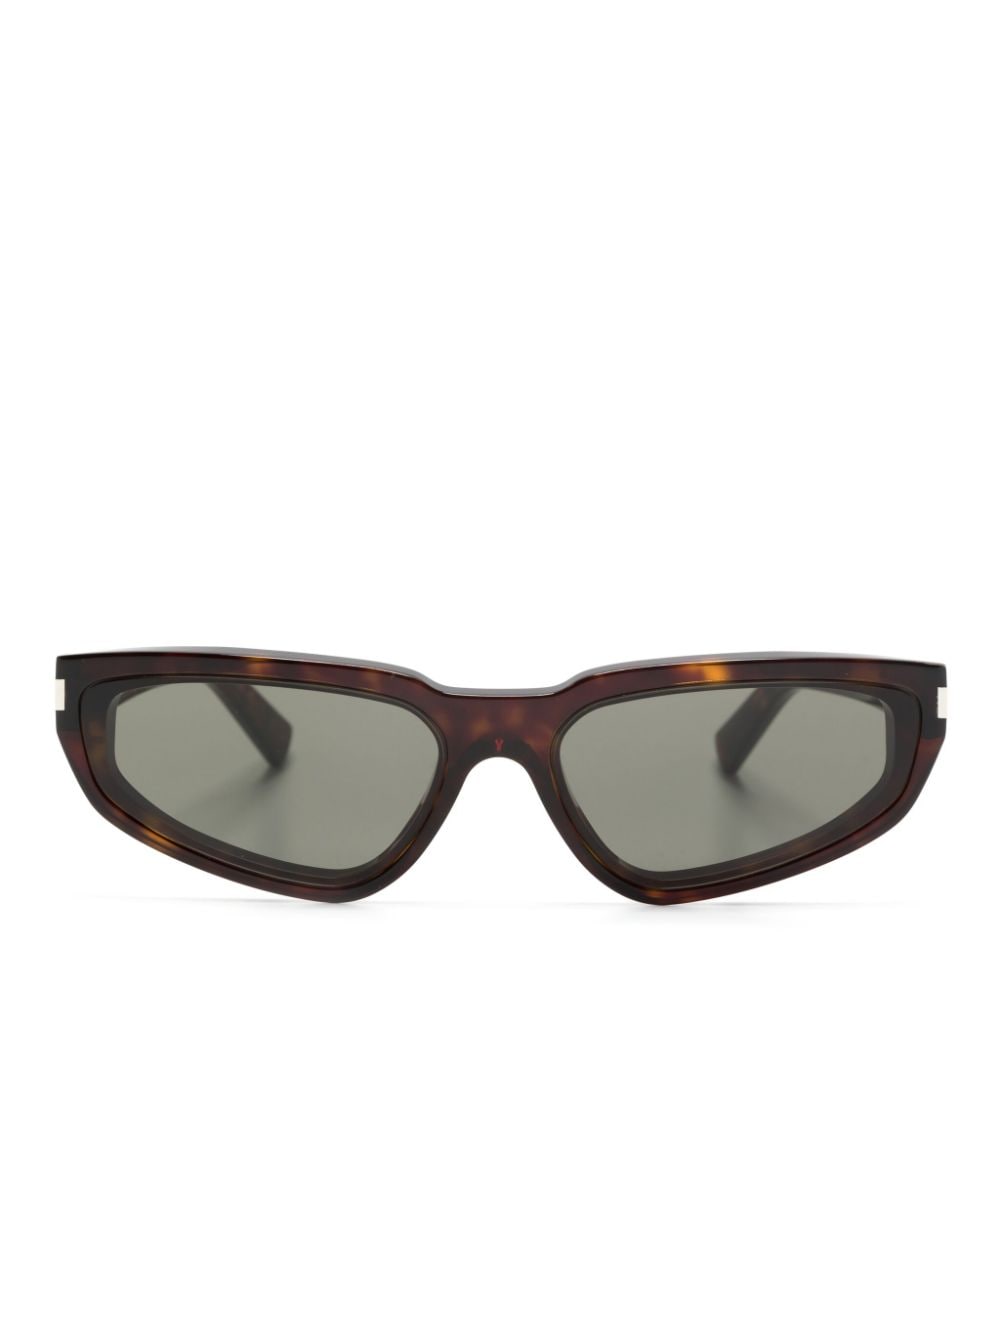 Saint Laurent Eyewear Nova tortoiseshell sunglasses - Brown von Saint Laurent Eyewear